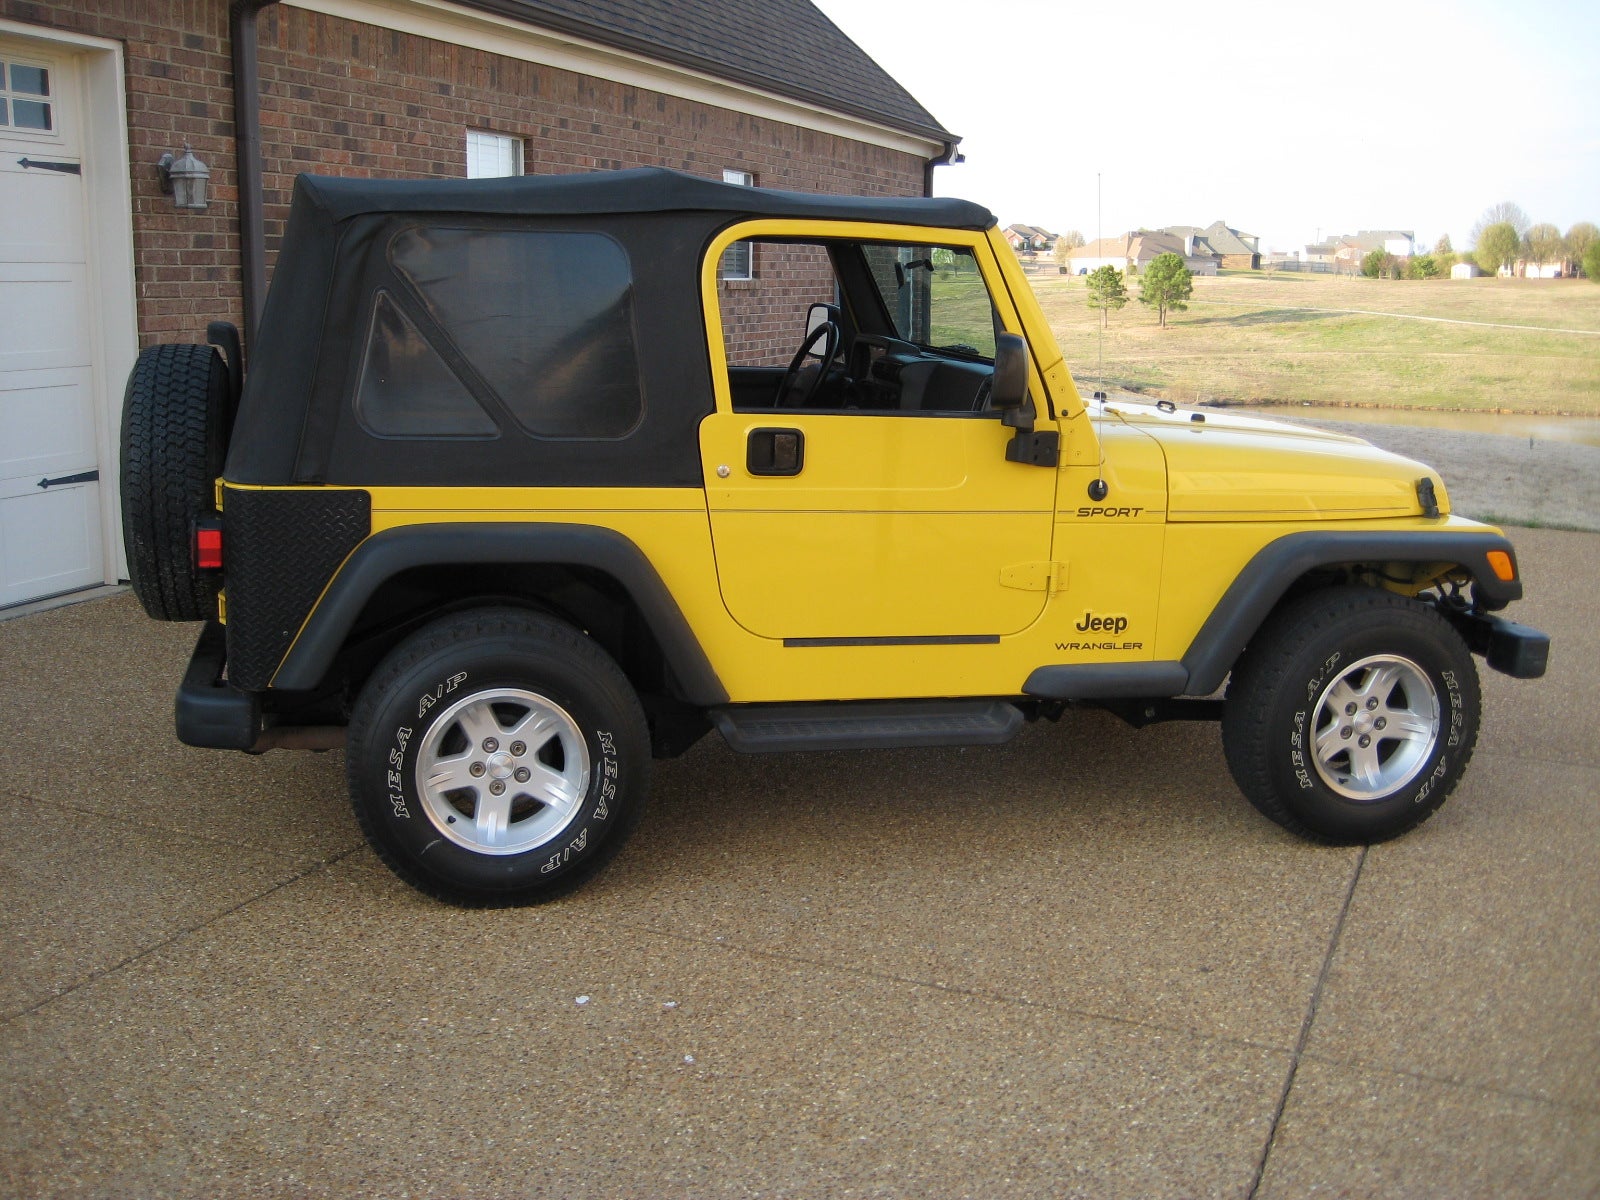 Compare 2004 jeep wrangler models #1